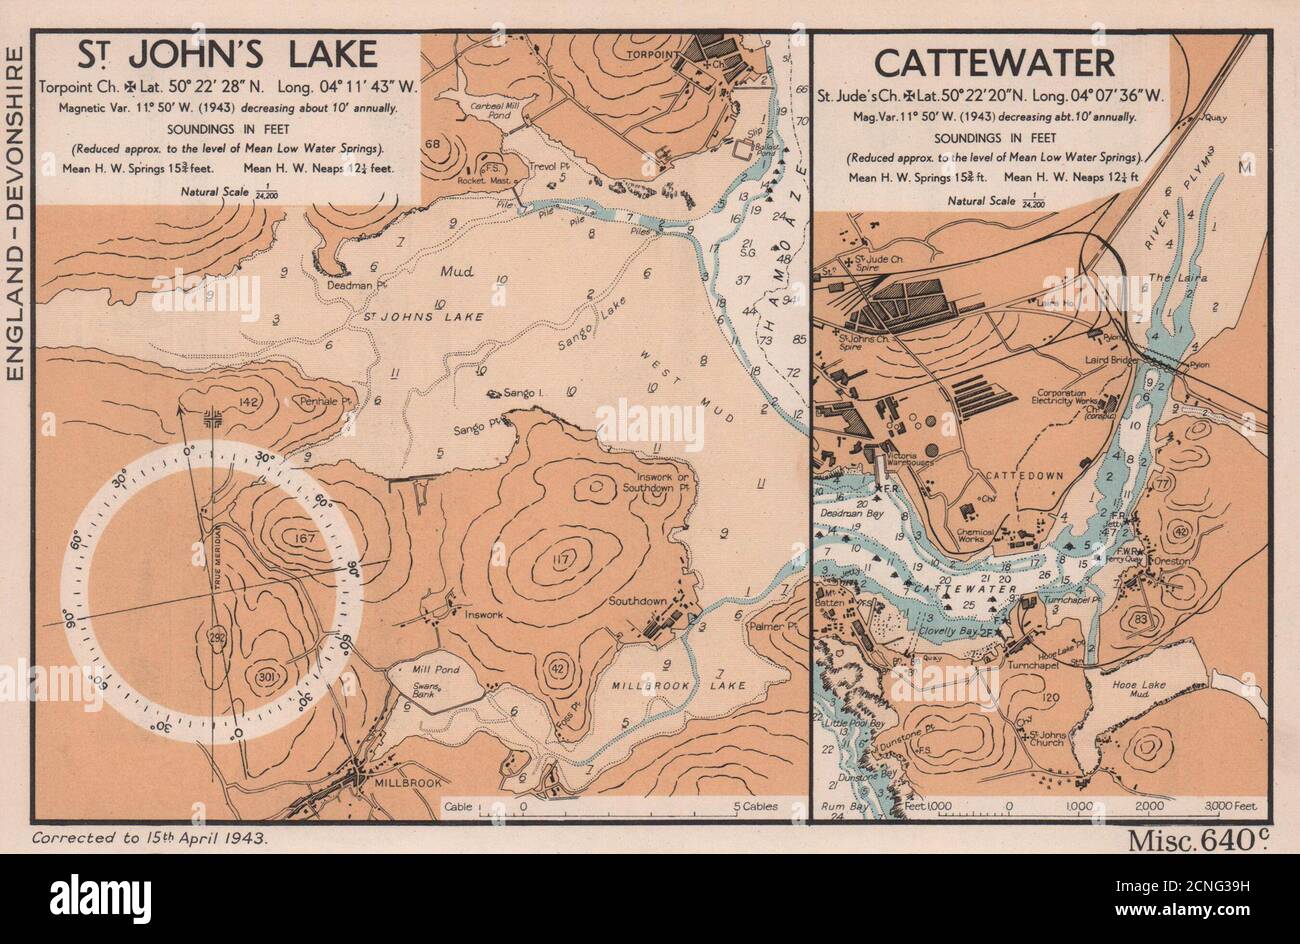 St. John's Lake & Cattewater sea coast charts Torpoint Devon. ADMIRALTY 1943 map Stock Photo